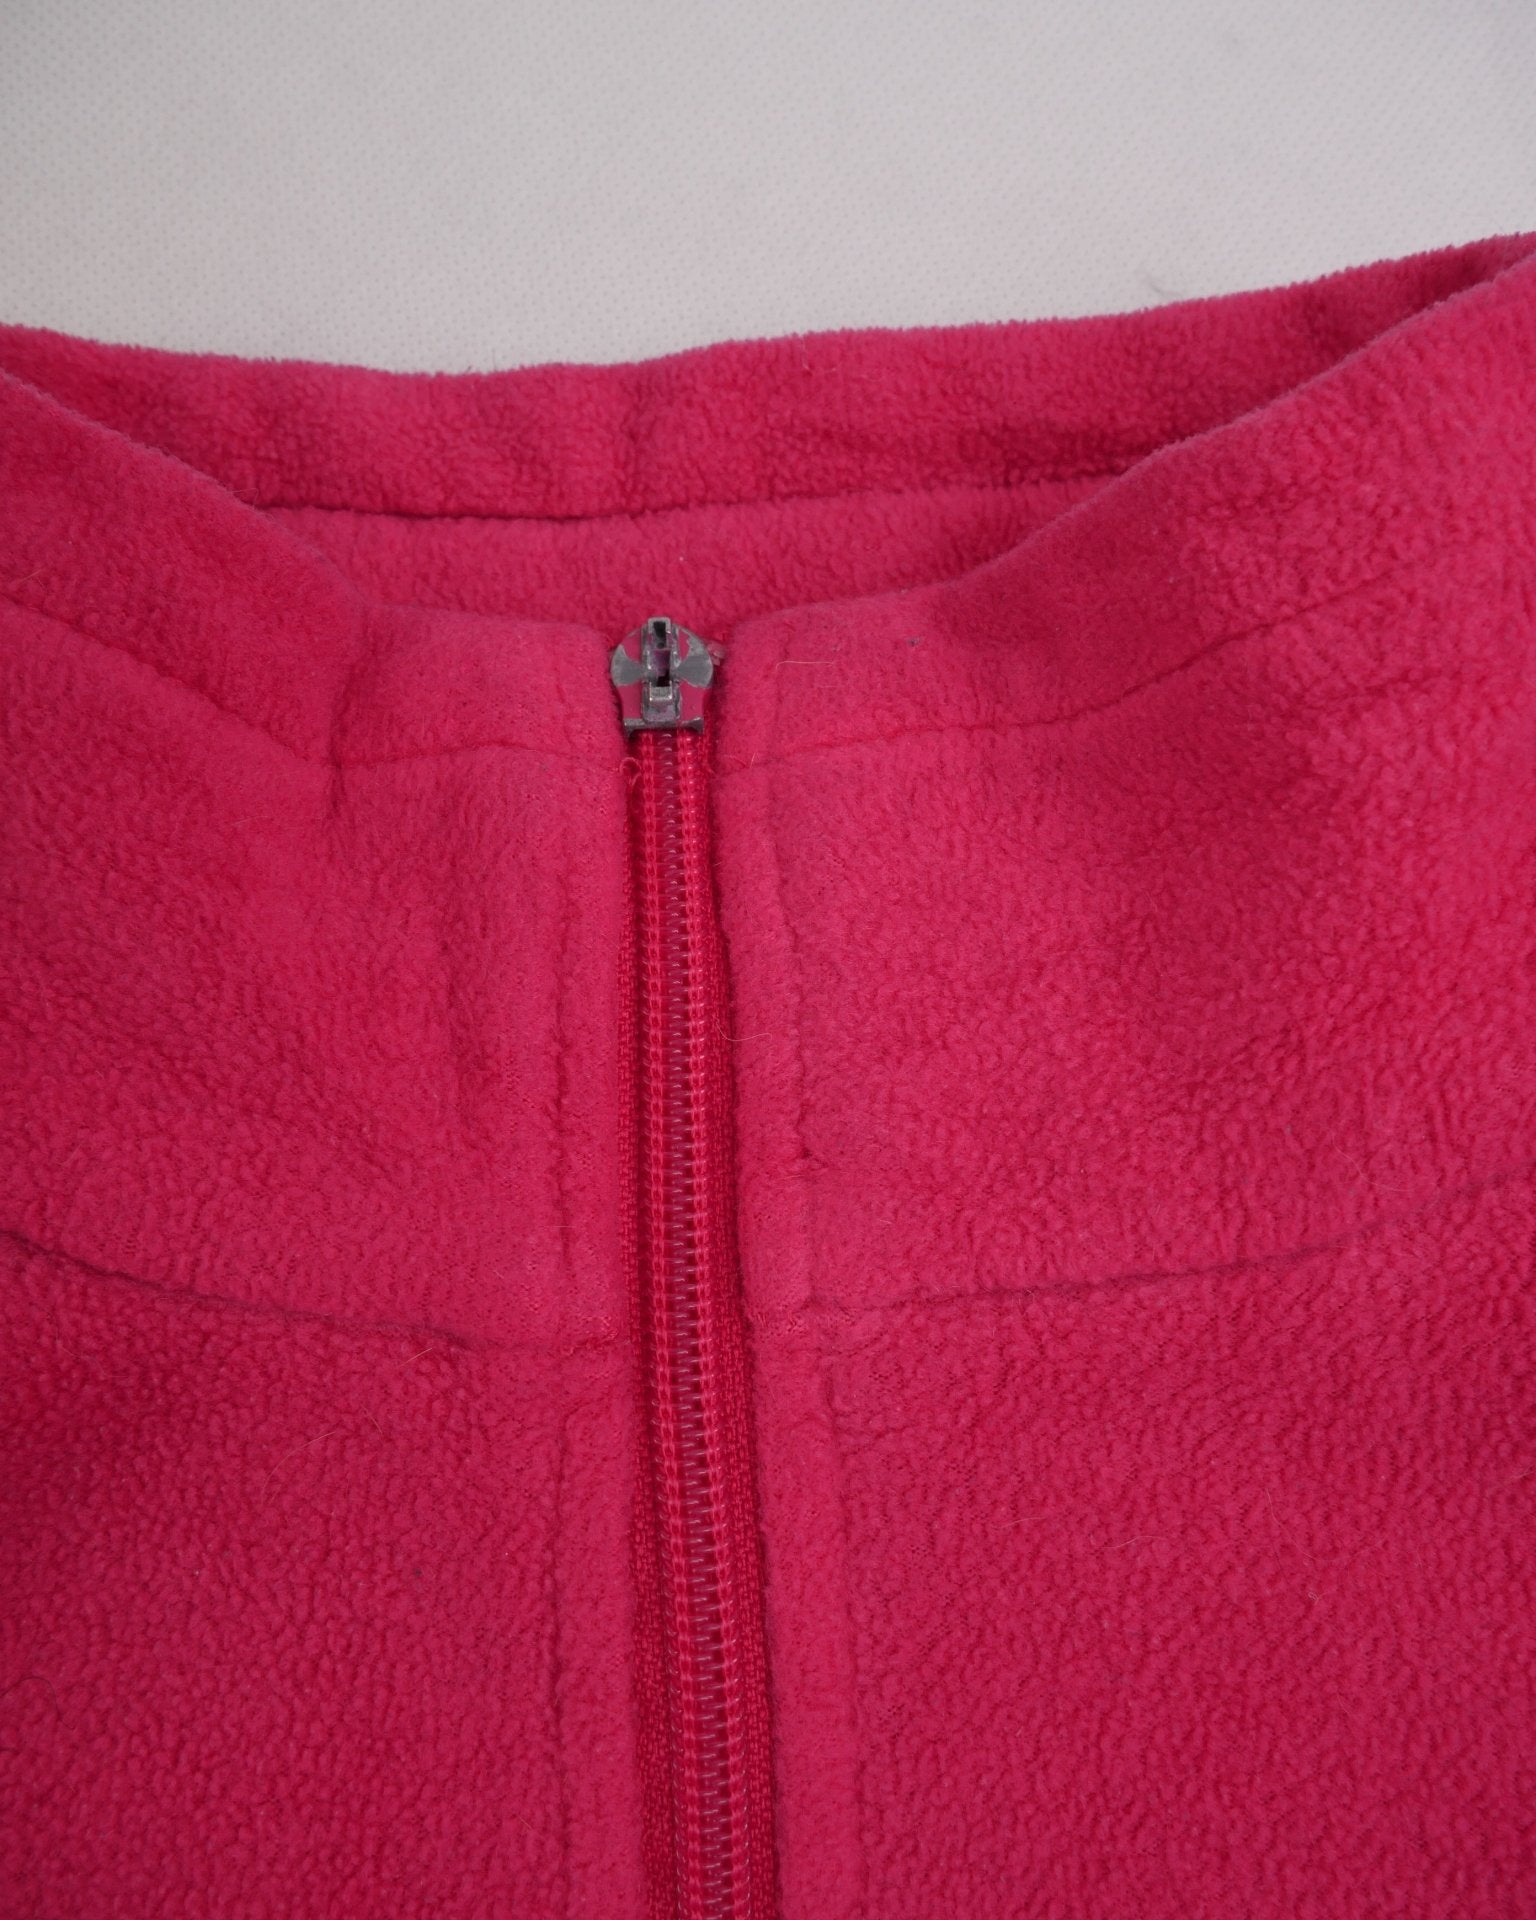 Columbia embroidered Spellout pink Fleece Jacke - Peeces